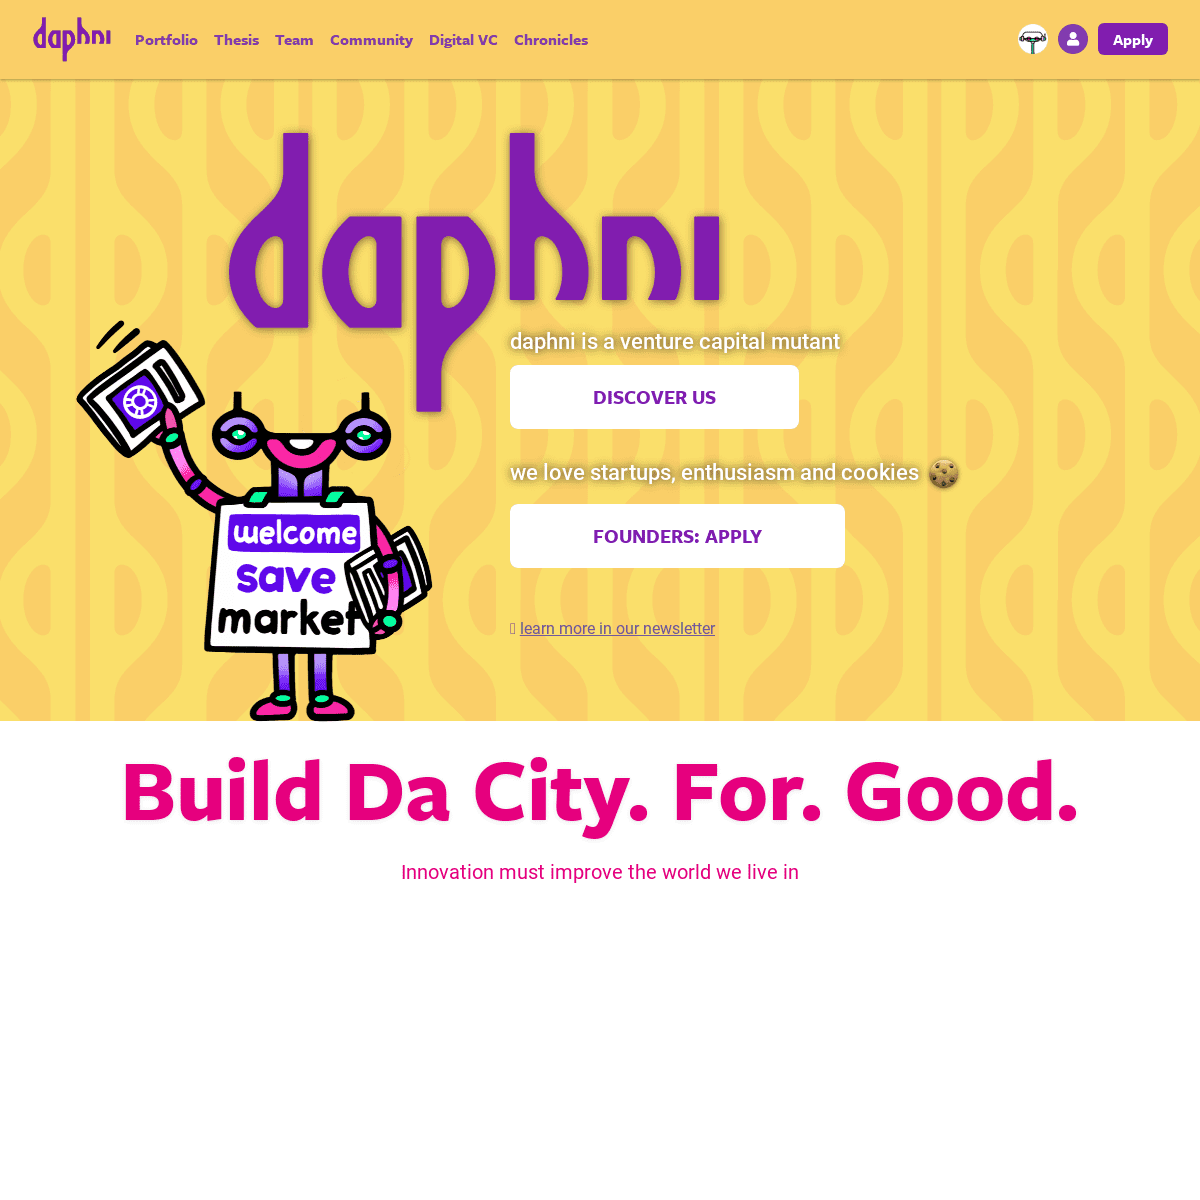 A complete backup of https://daphni.com